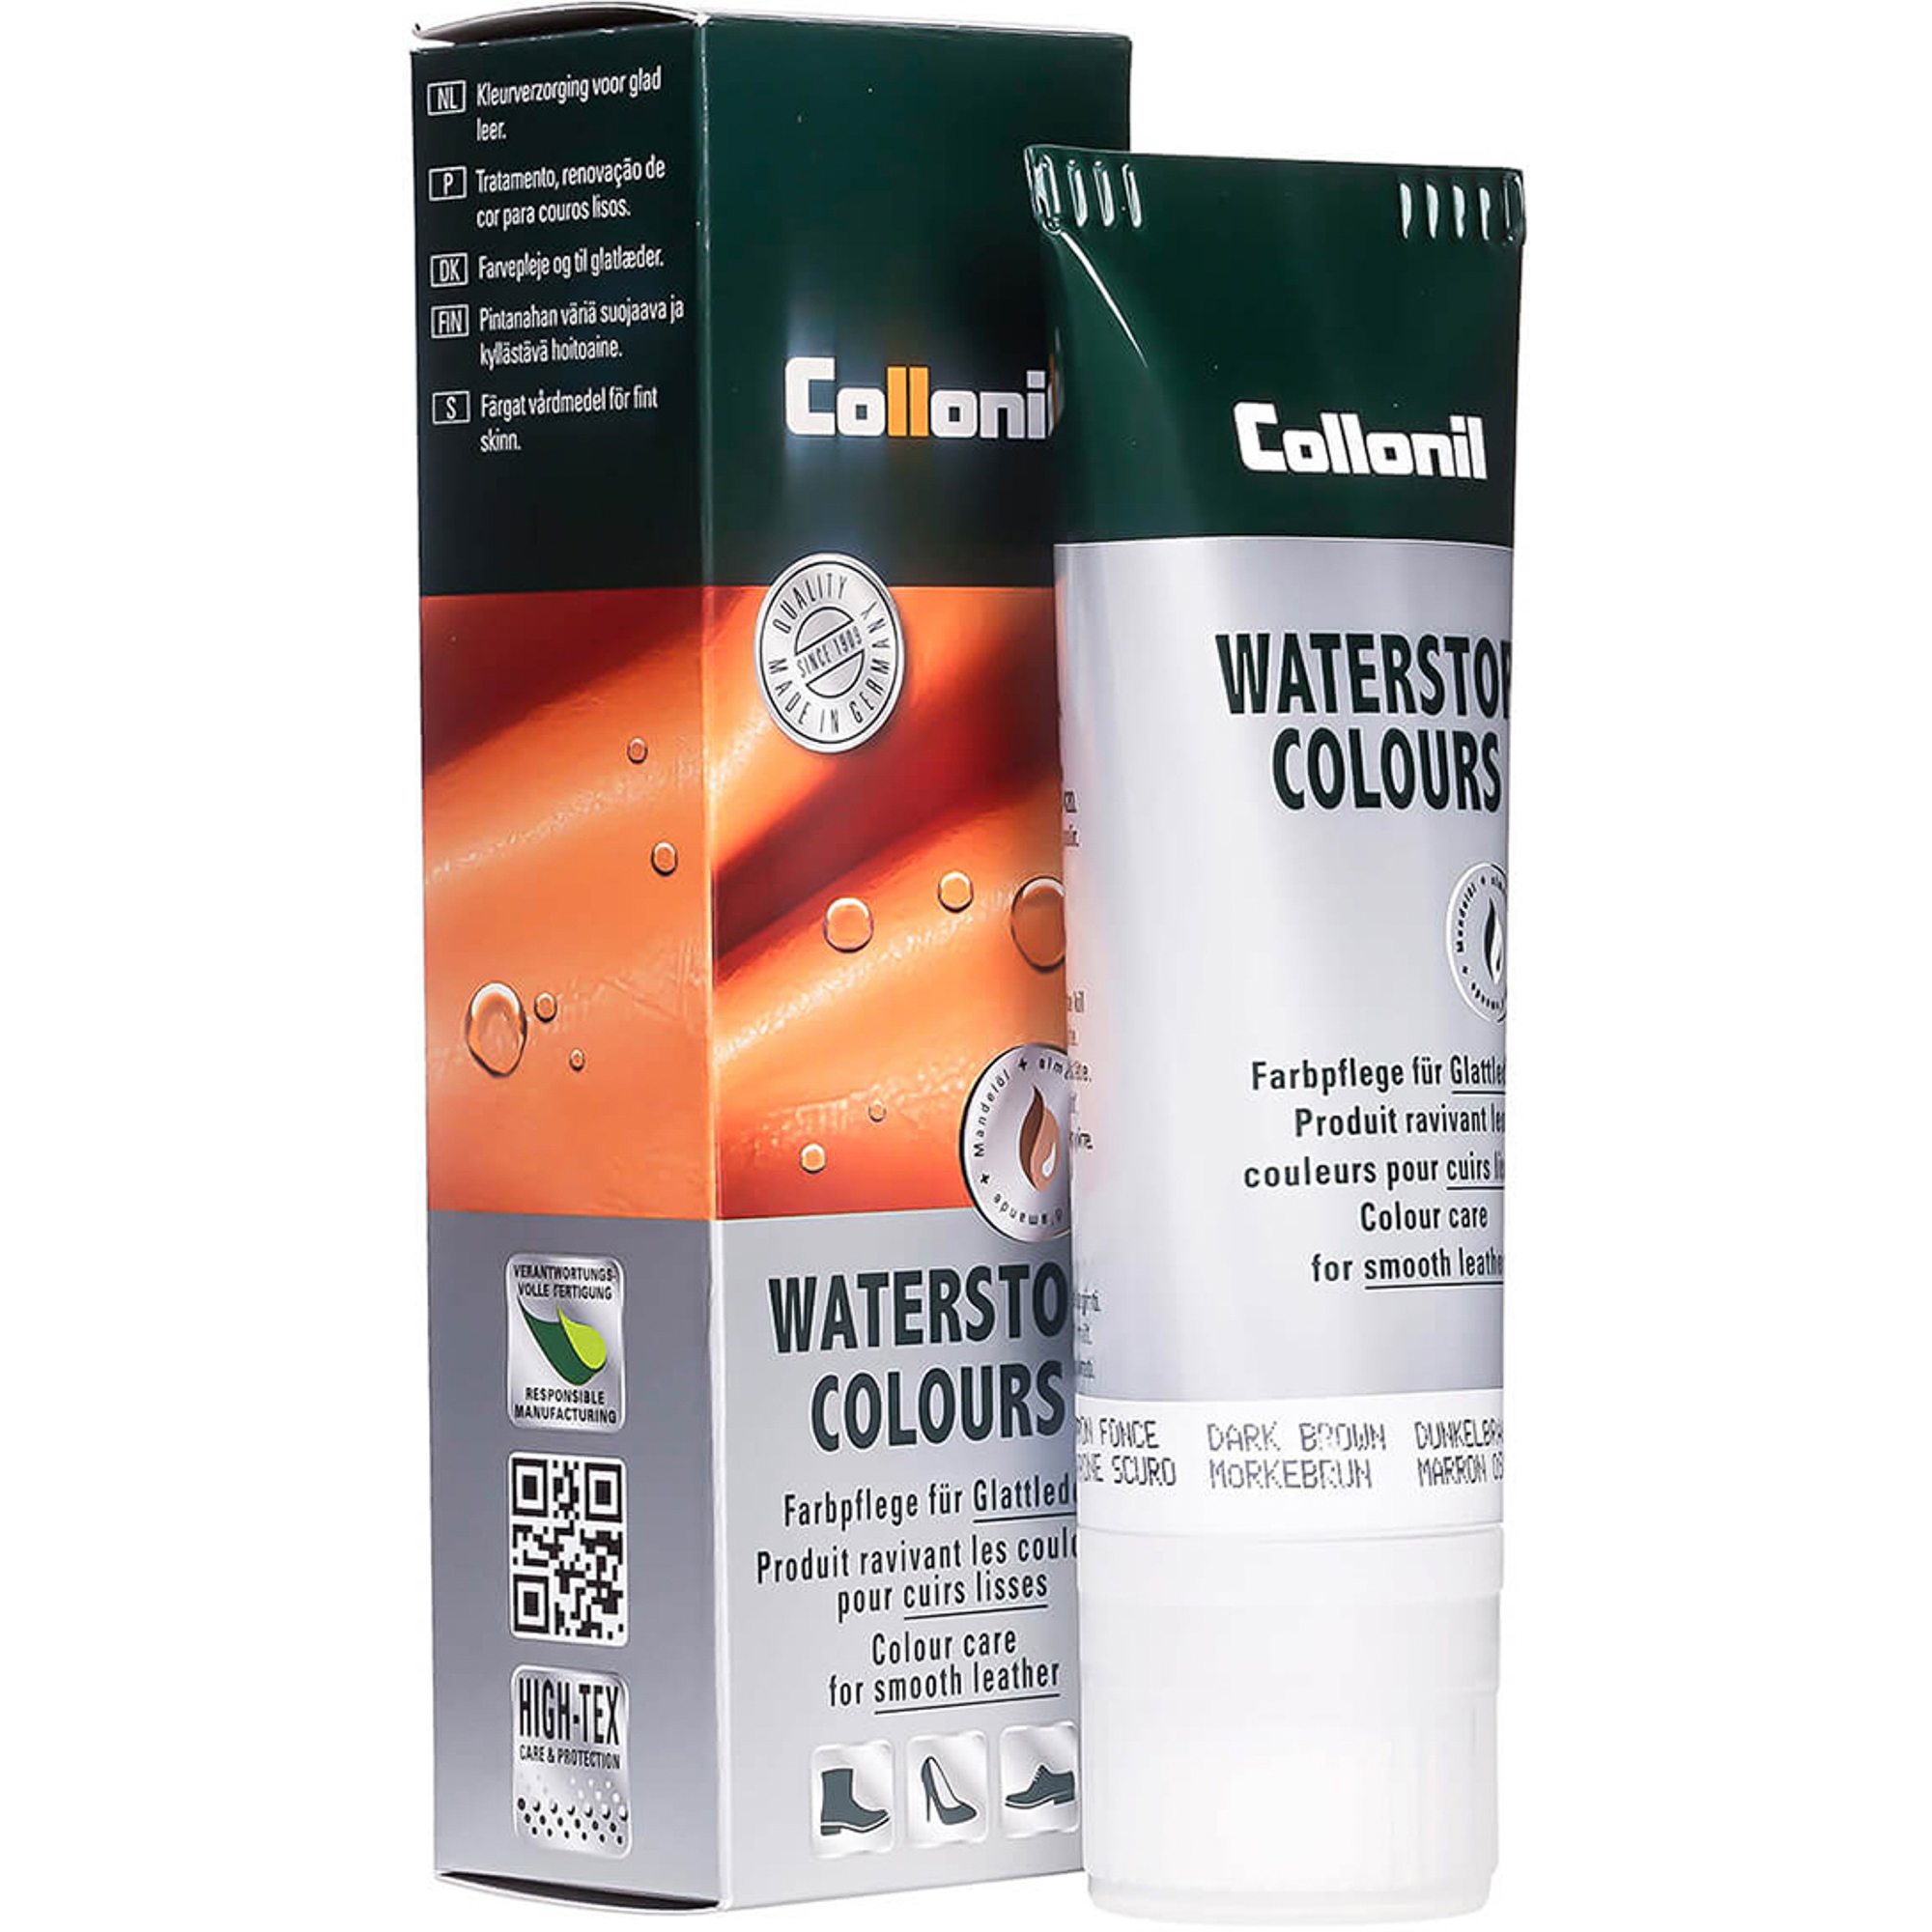 Крем Collonil Waterstop Colours водоотталкивающий темно-коричневый 75 мл крем collonil waterstop colours водоотталкивающий черный 75 мл